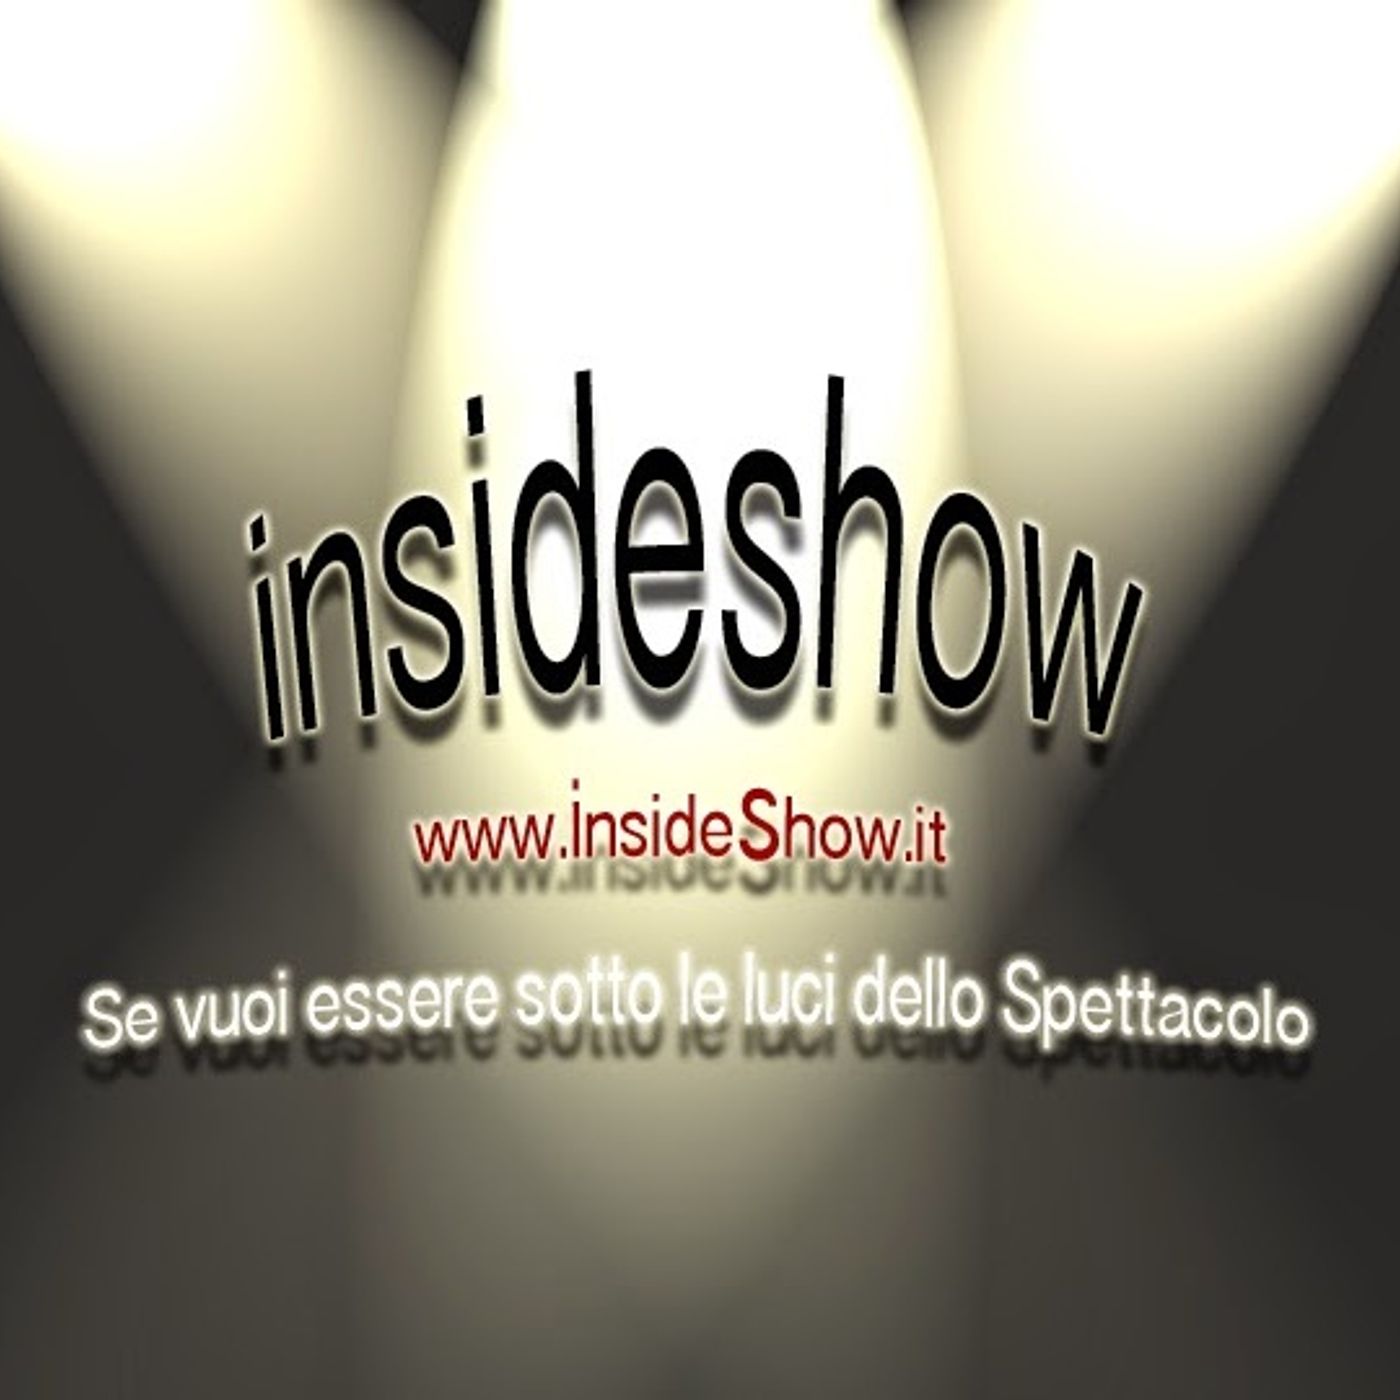 InsideShow Italia's show